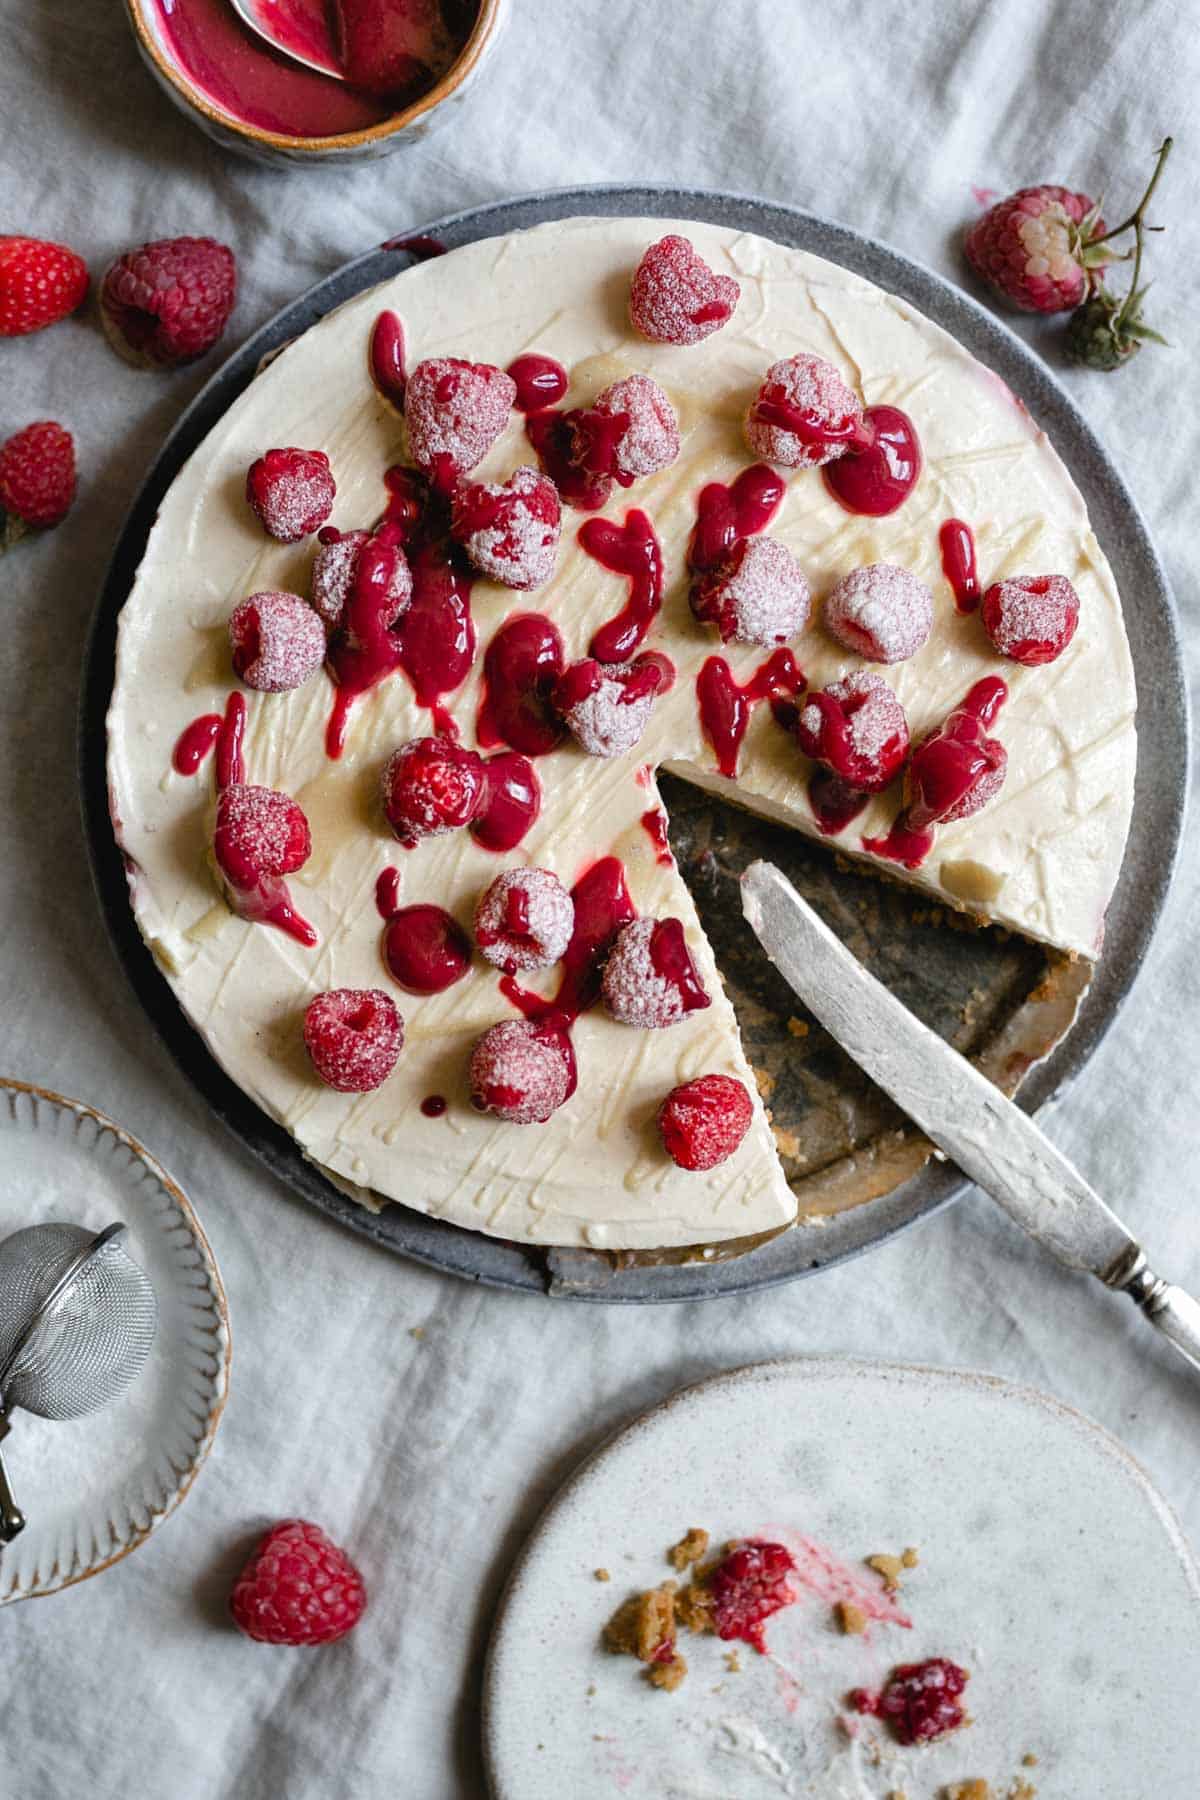 Classic no-bake raspberry and white chocolate cheesecake. Always a crowd pleaser! #cheesecake #raspberries #nobakedessert #easyrecipe | via @annabanana.co